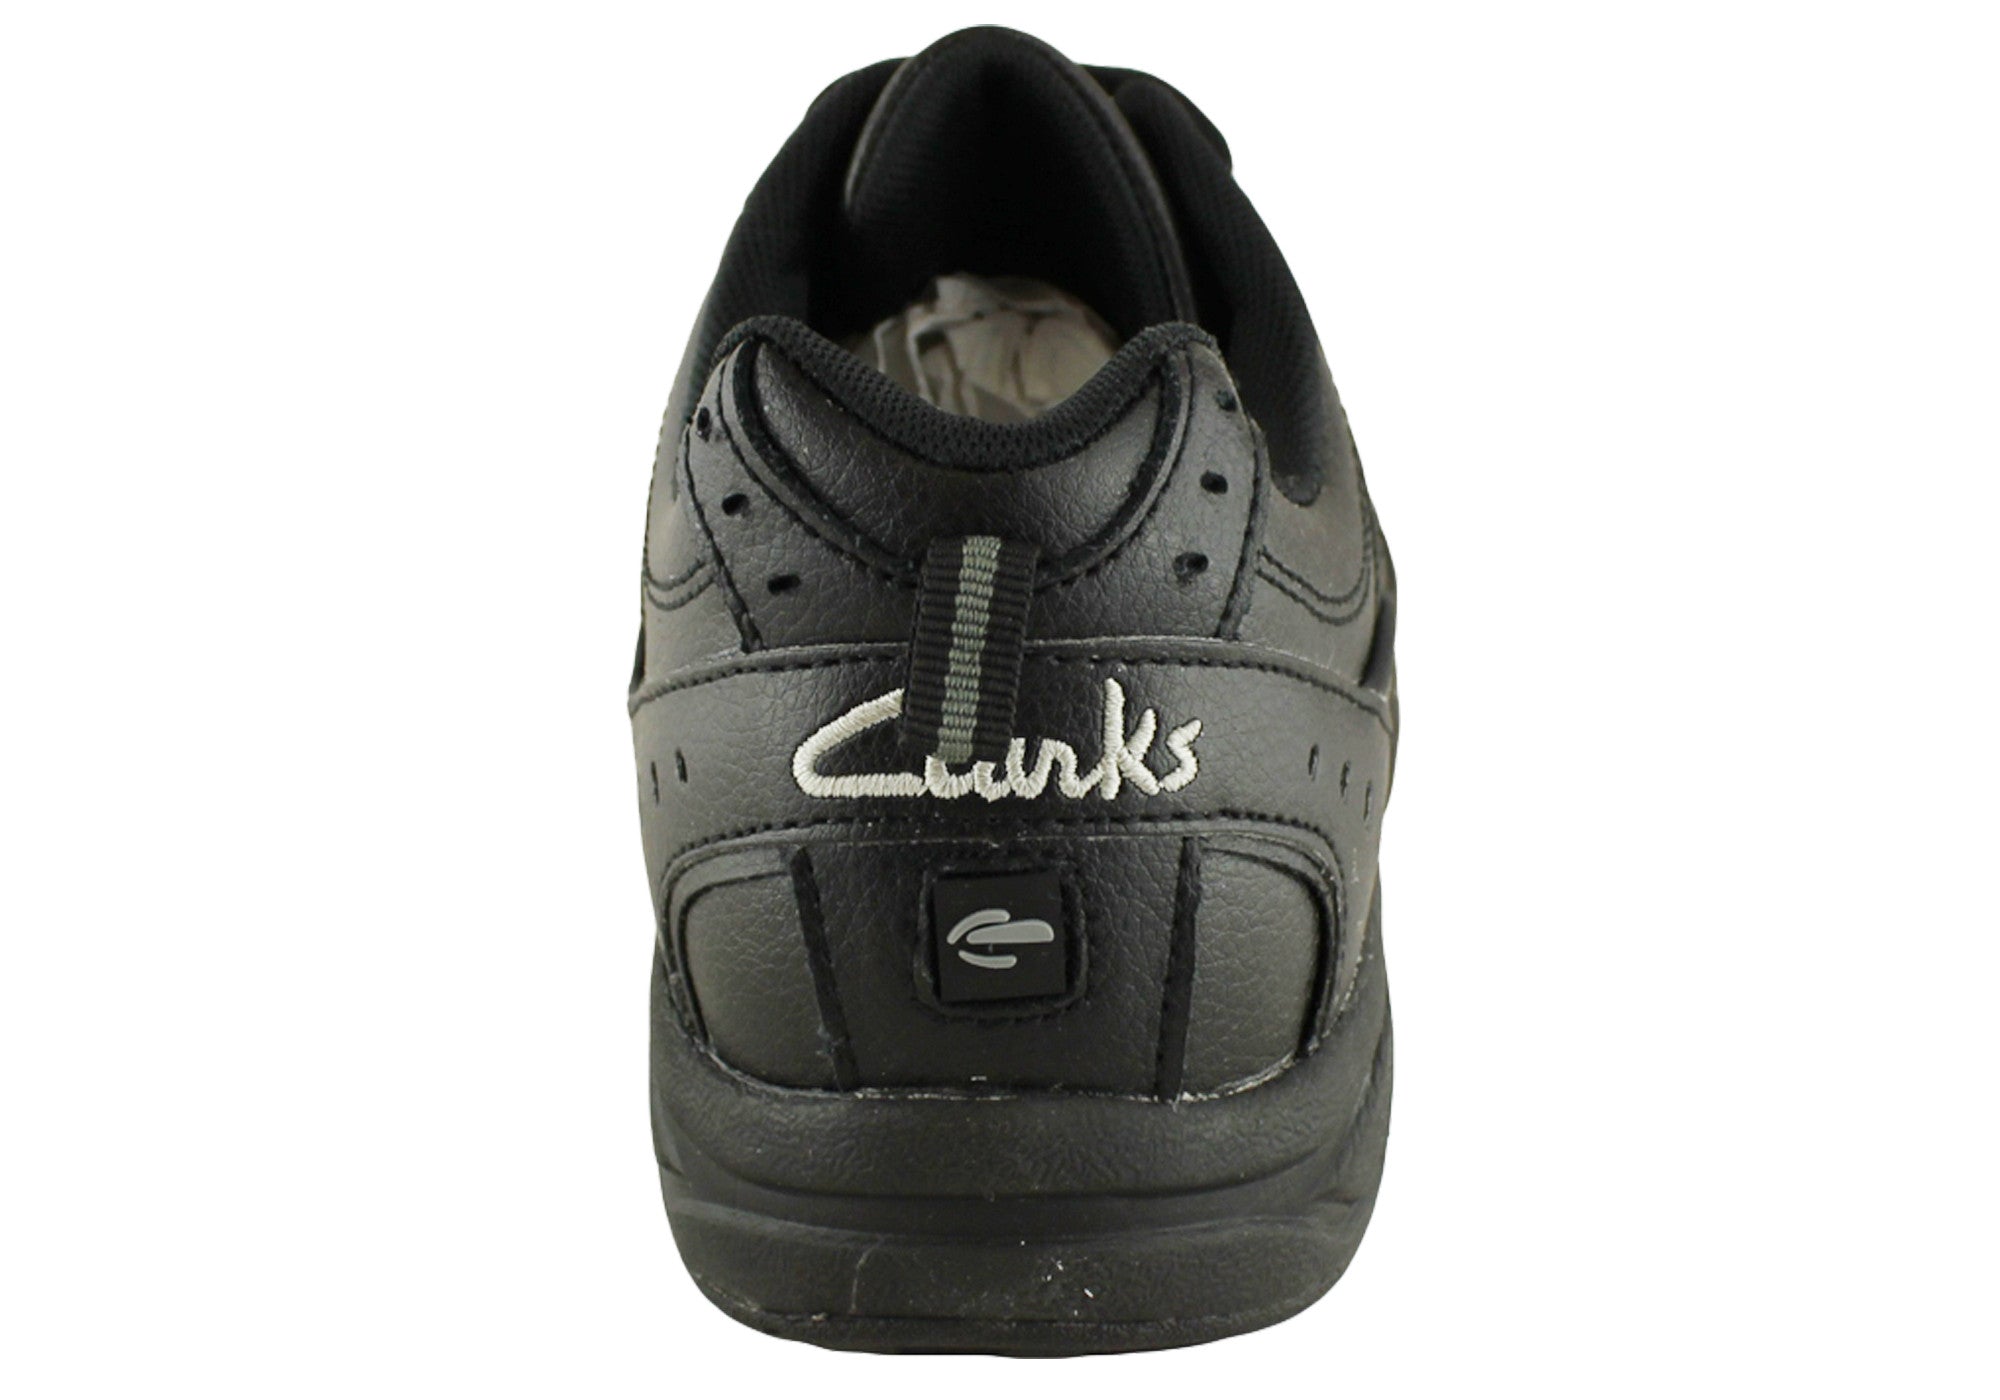 clarks shoes vancouver